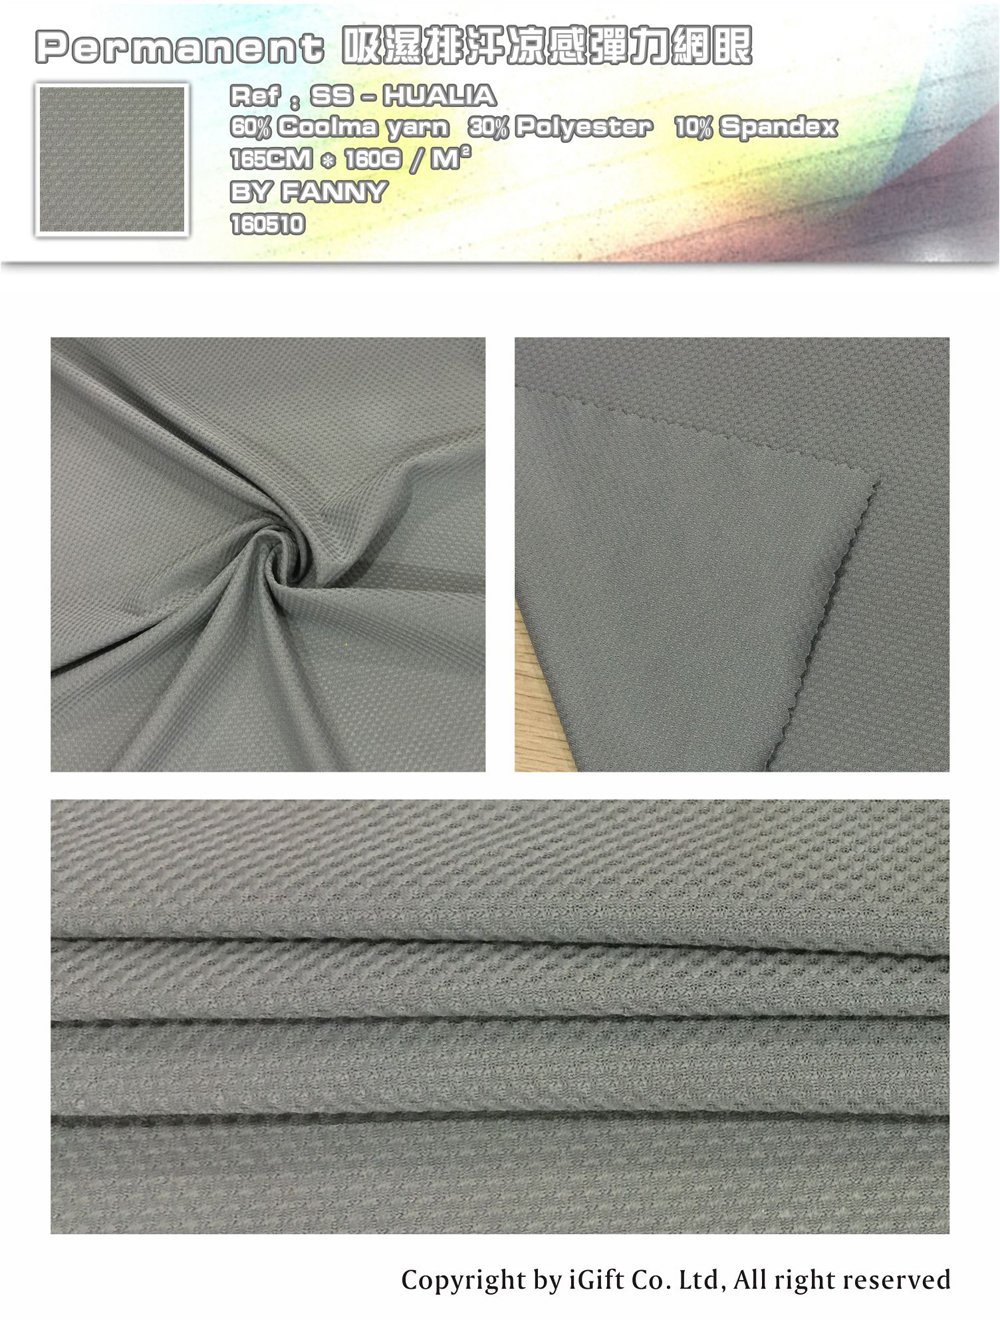 Permanent 吸濕排汗凉感弹力網眼       Ref:SS-HUALIA    60％ Coolma yarn   30％Polyester 10％Spandex     165CM*160G/M²   BY  FANNY   160510